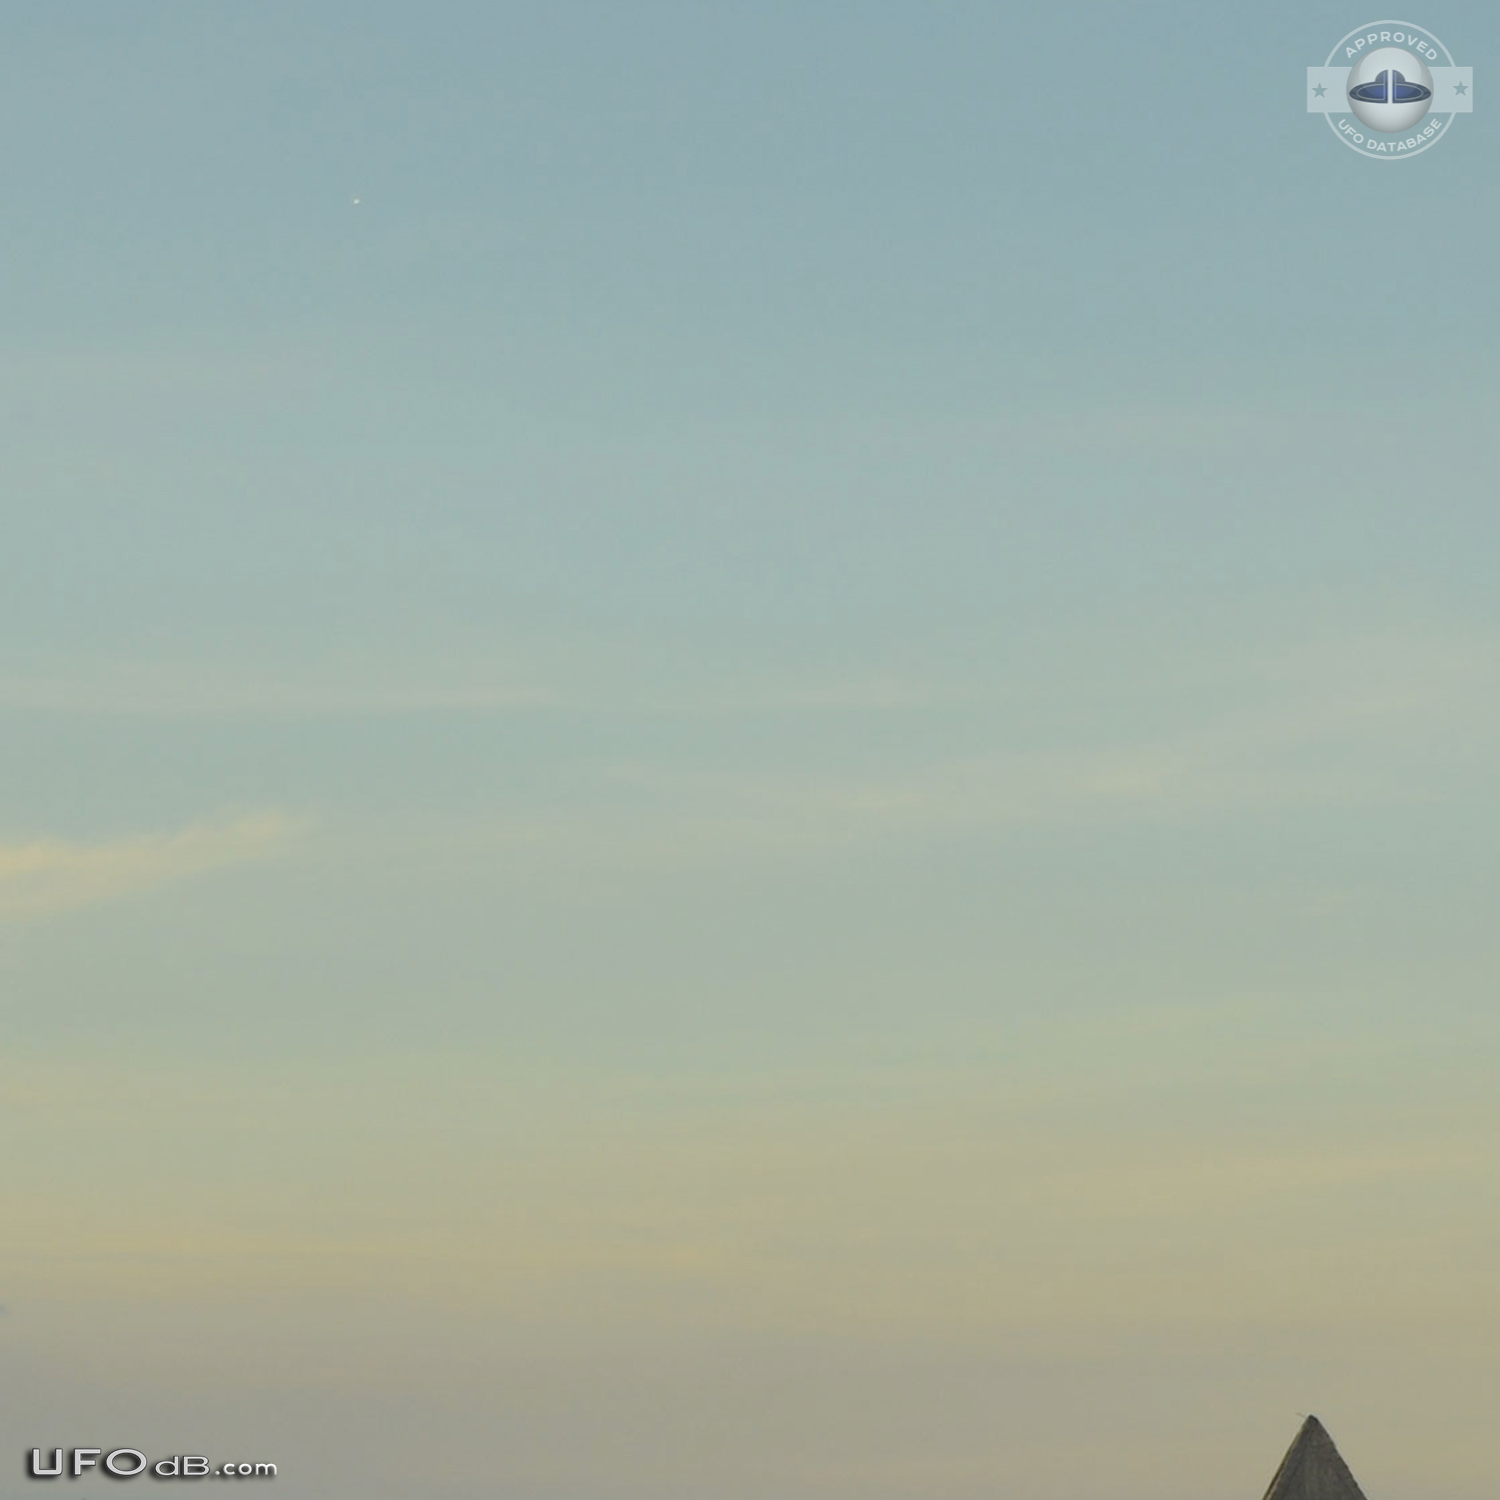 Sea picture capture UFO far away near Riau Islands Indonesia 2014 UFO Picture #636-2